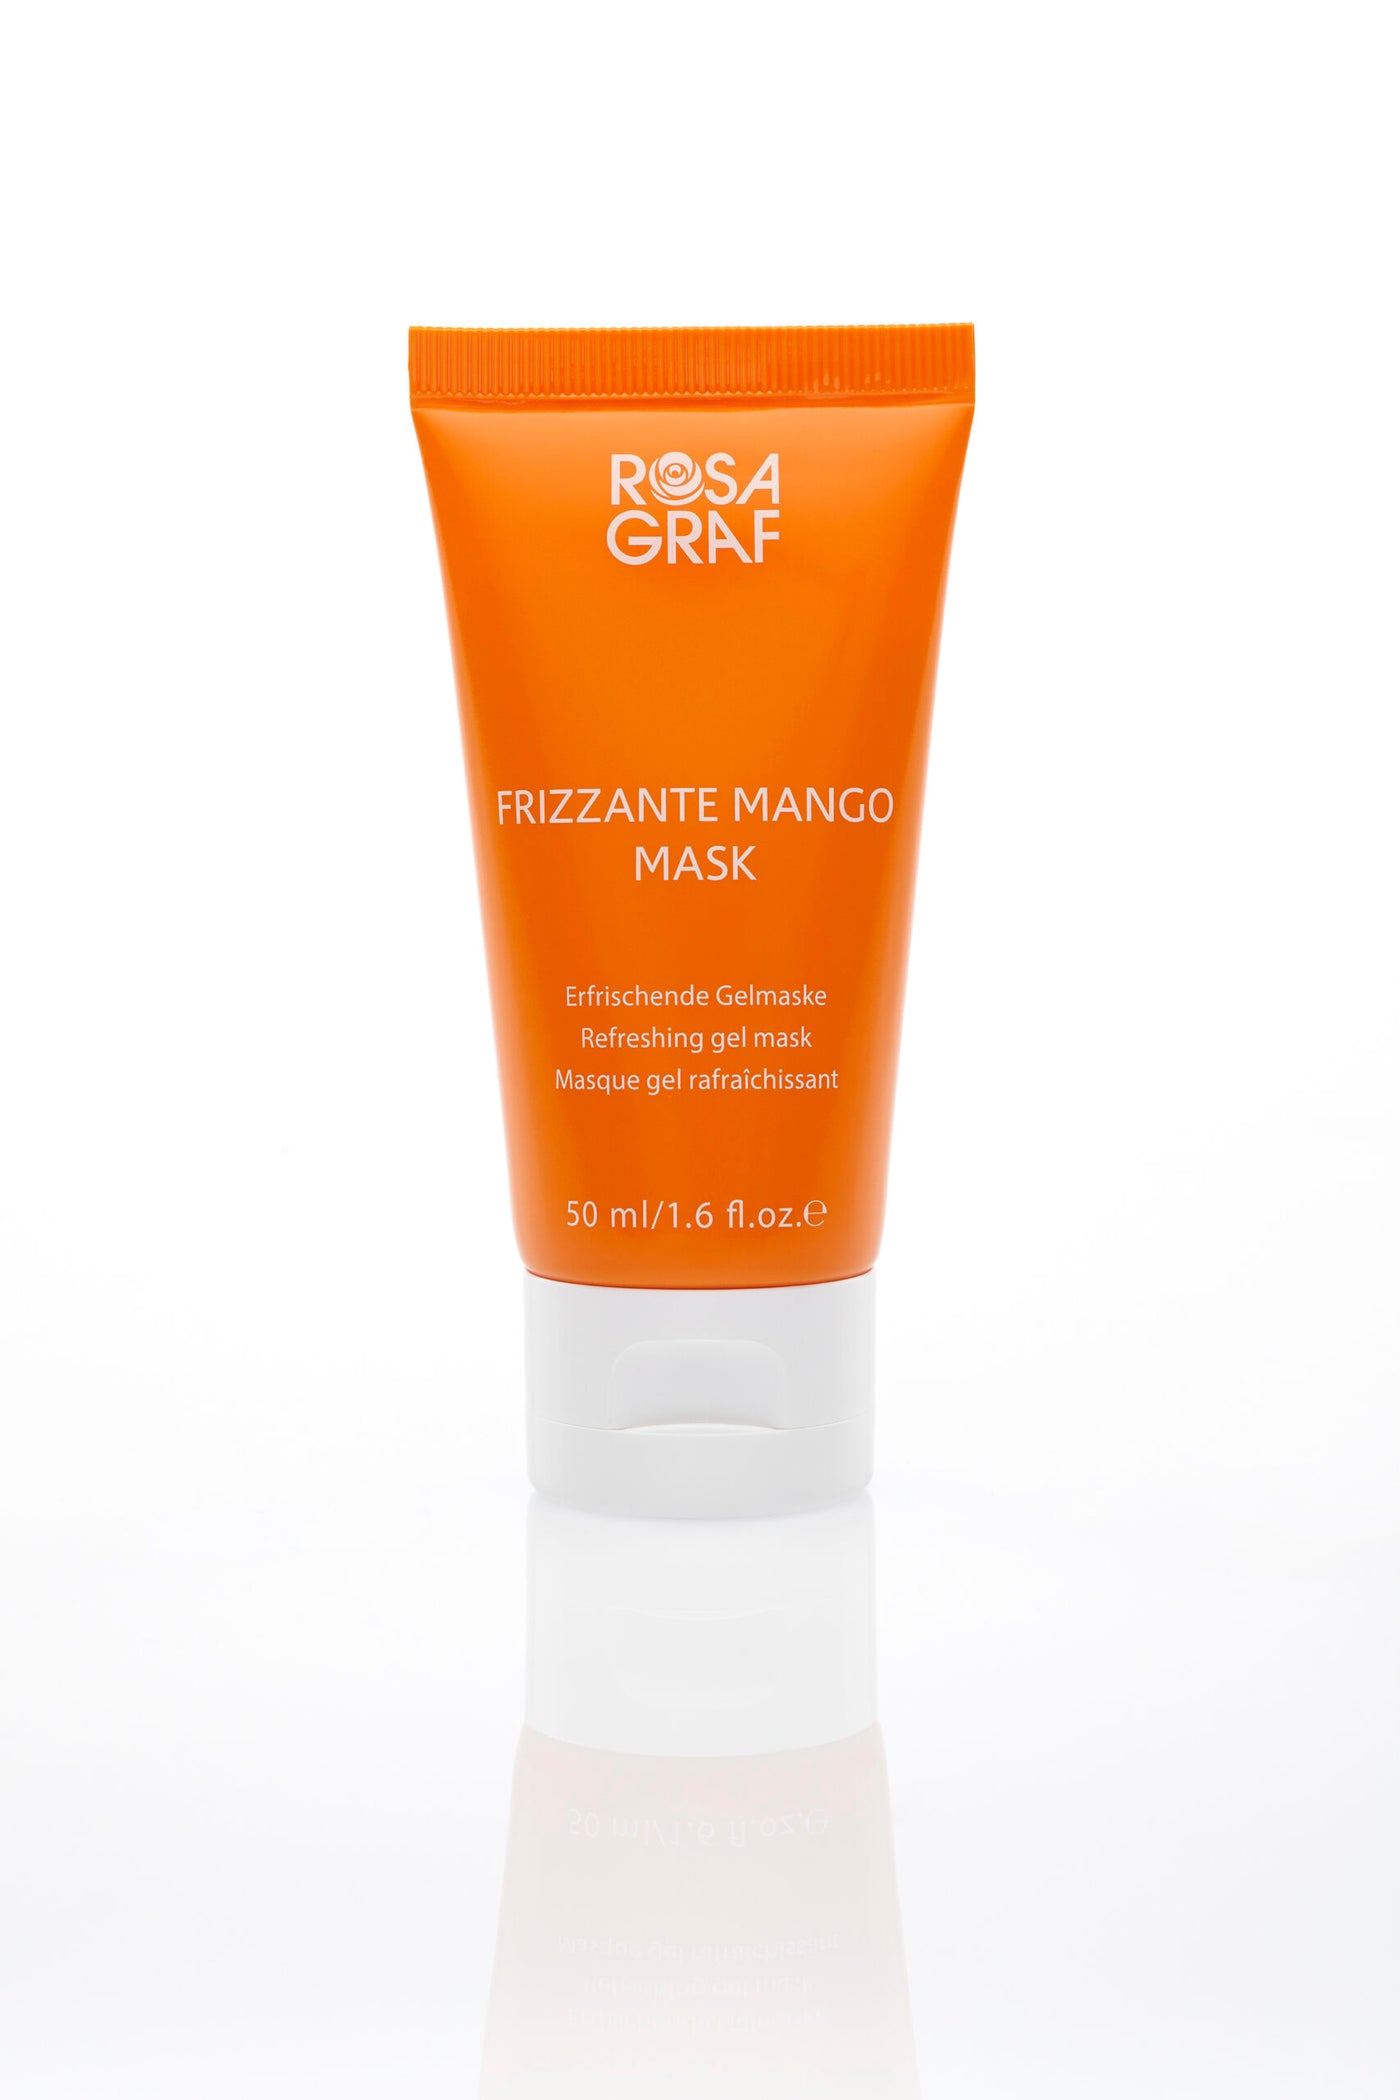 Rosa Graf - Frizzante mango mask 50ml